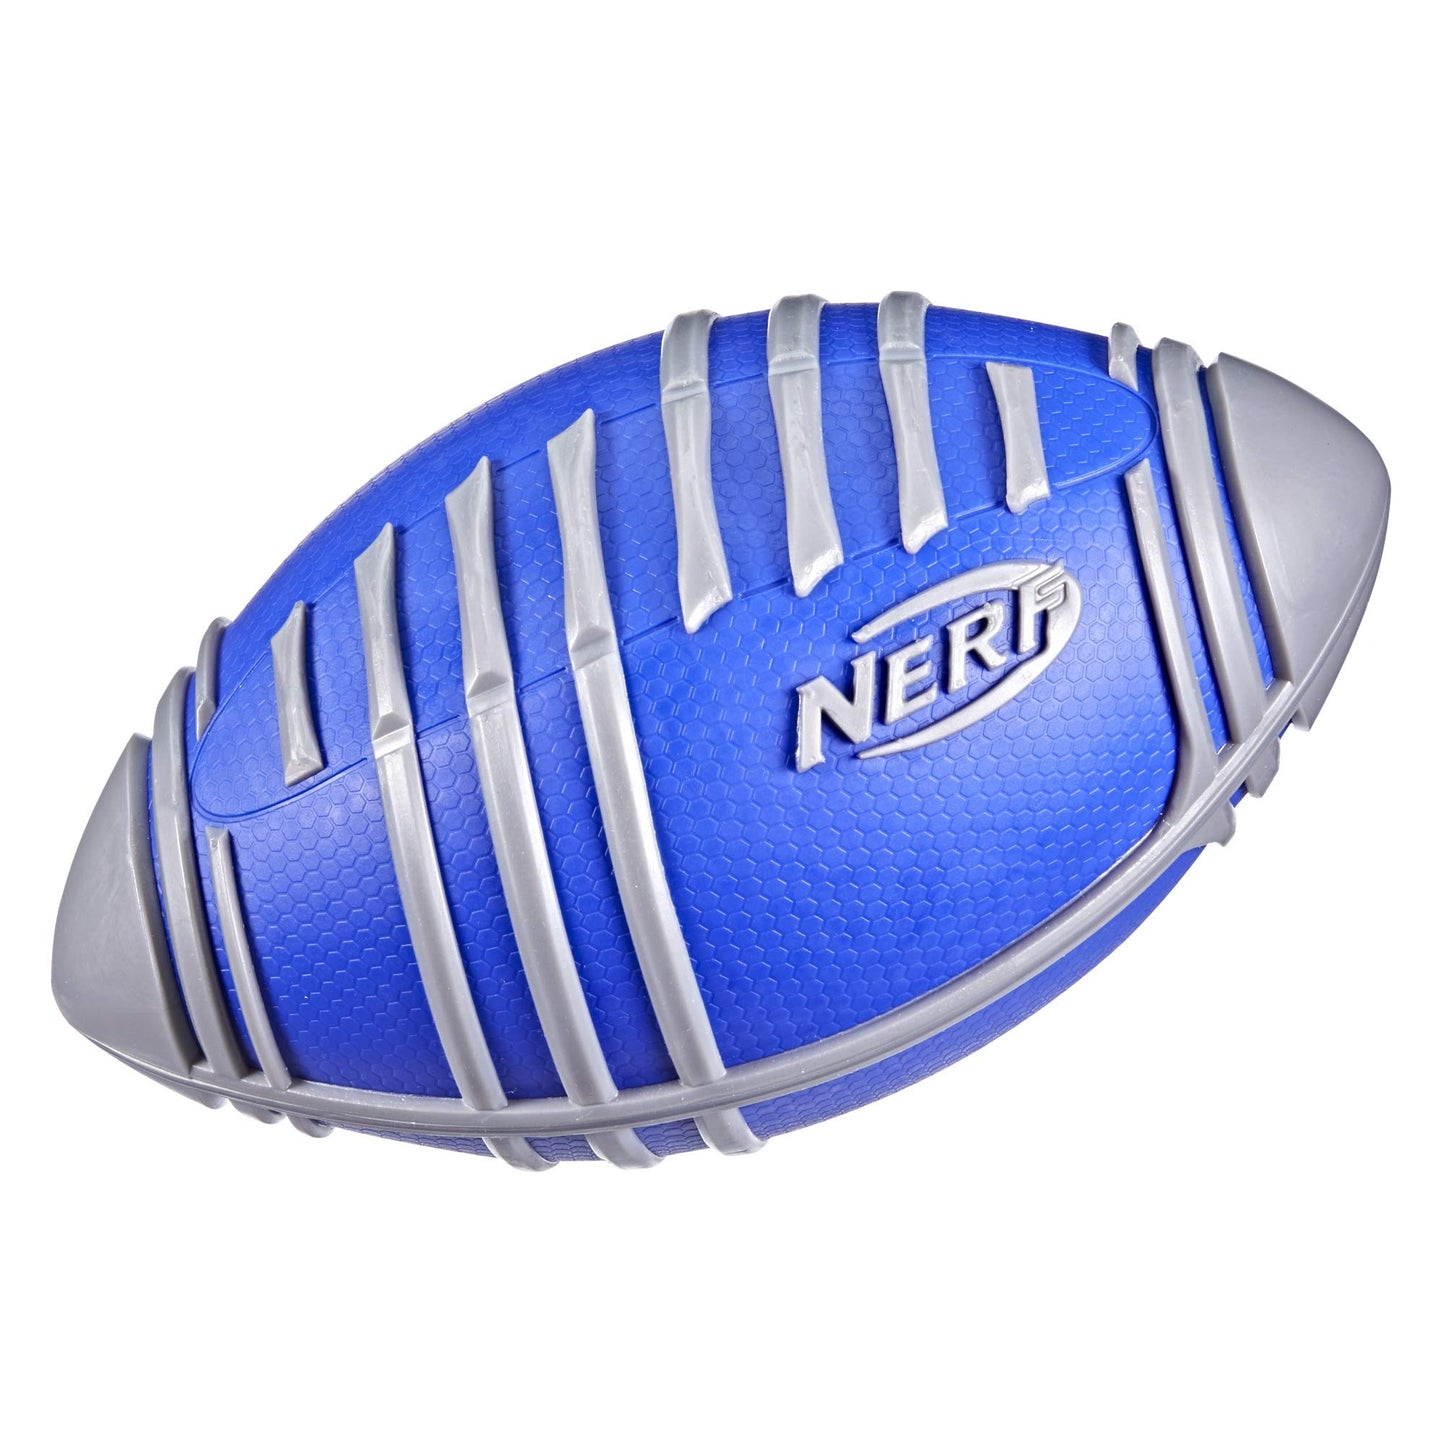 Nerf Weather Blitz Football